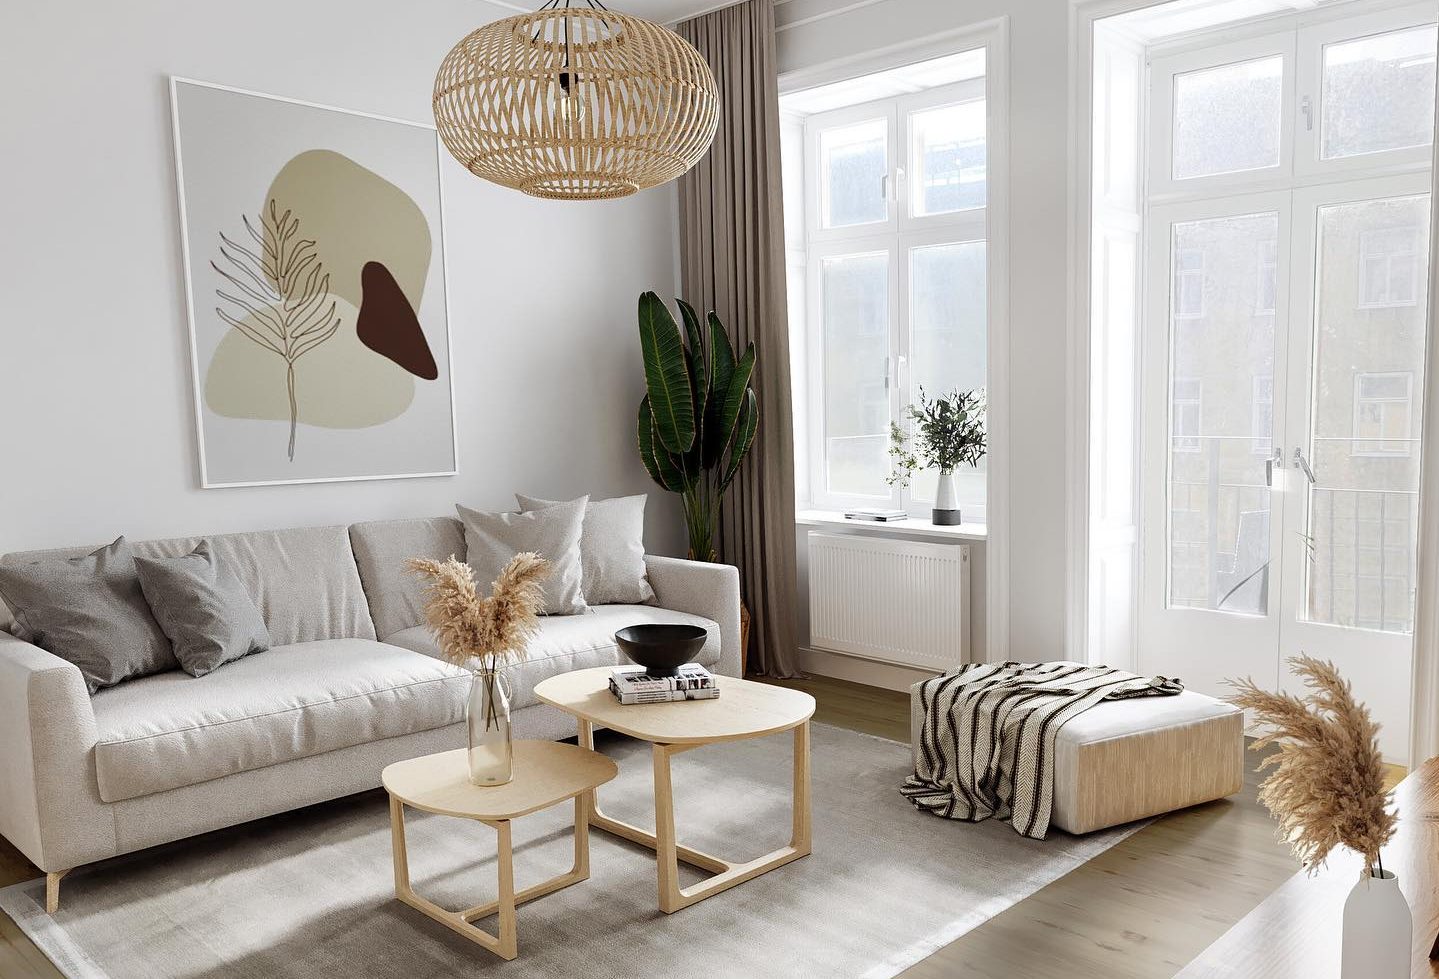 10 items για το σπίτι που θα δημιουργήσουν την απόλυτη cozy ατμόσφαιρα (την έχεις ανάγκη τώρα!)